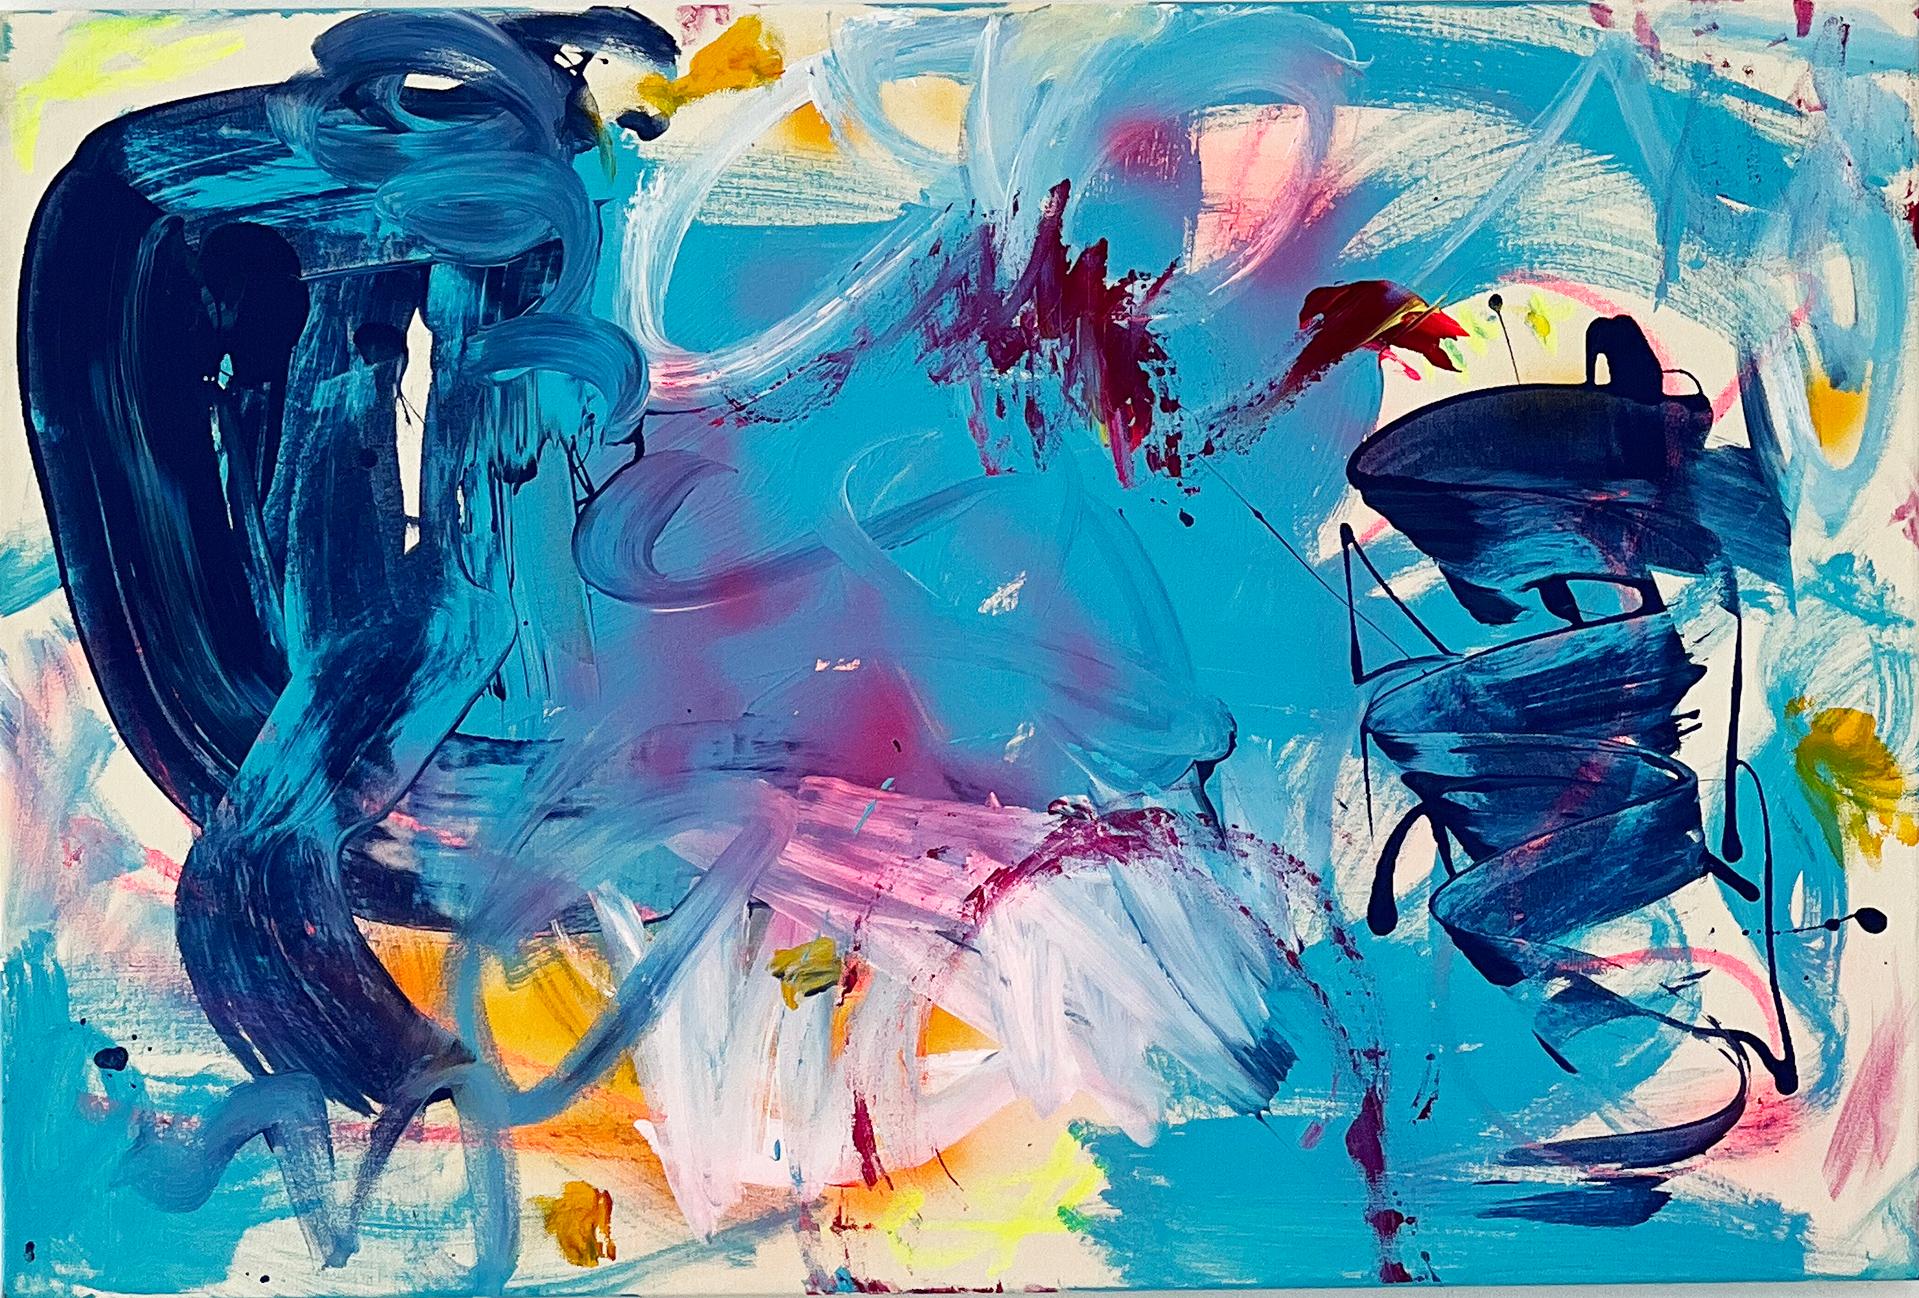 Abstract Painting Amy Smith - Un rêve bleu - acrylique sur toile